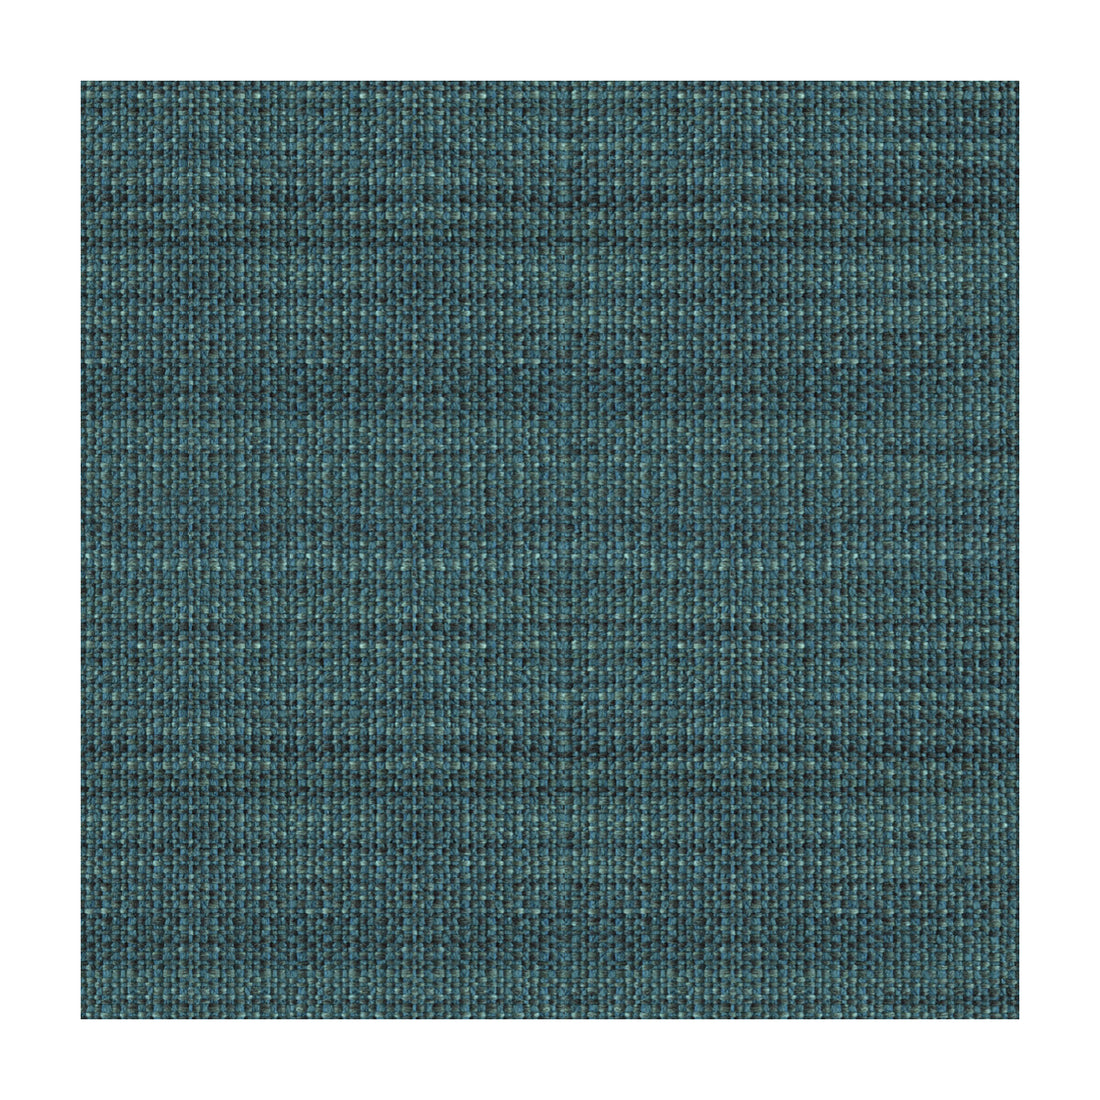 Kravet Smart fabric in 33599-5 color - pattern 33599.5.0 - by Kravet Smart